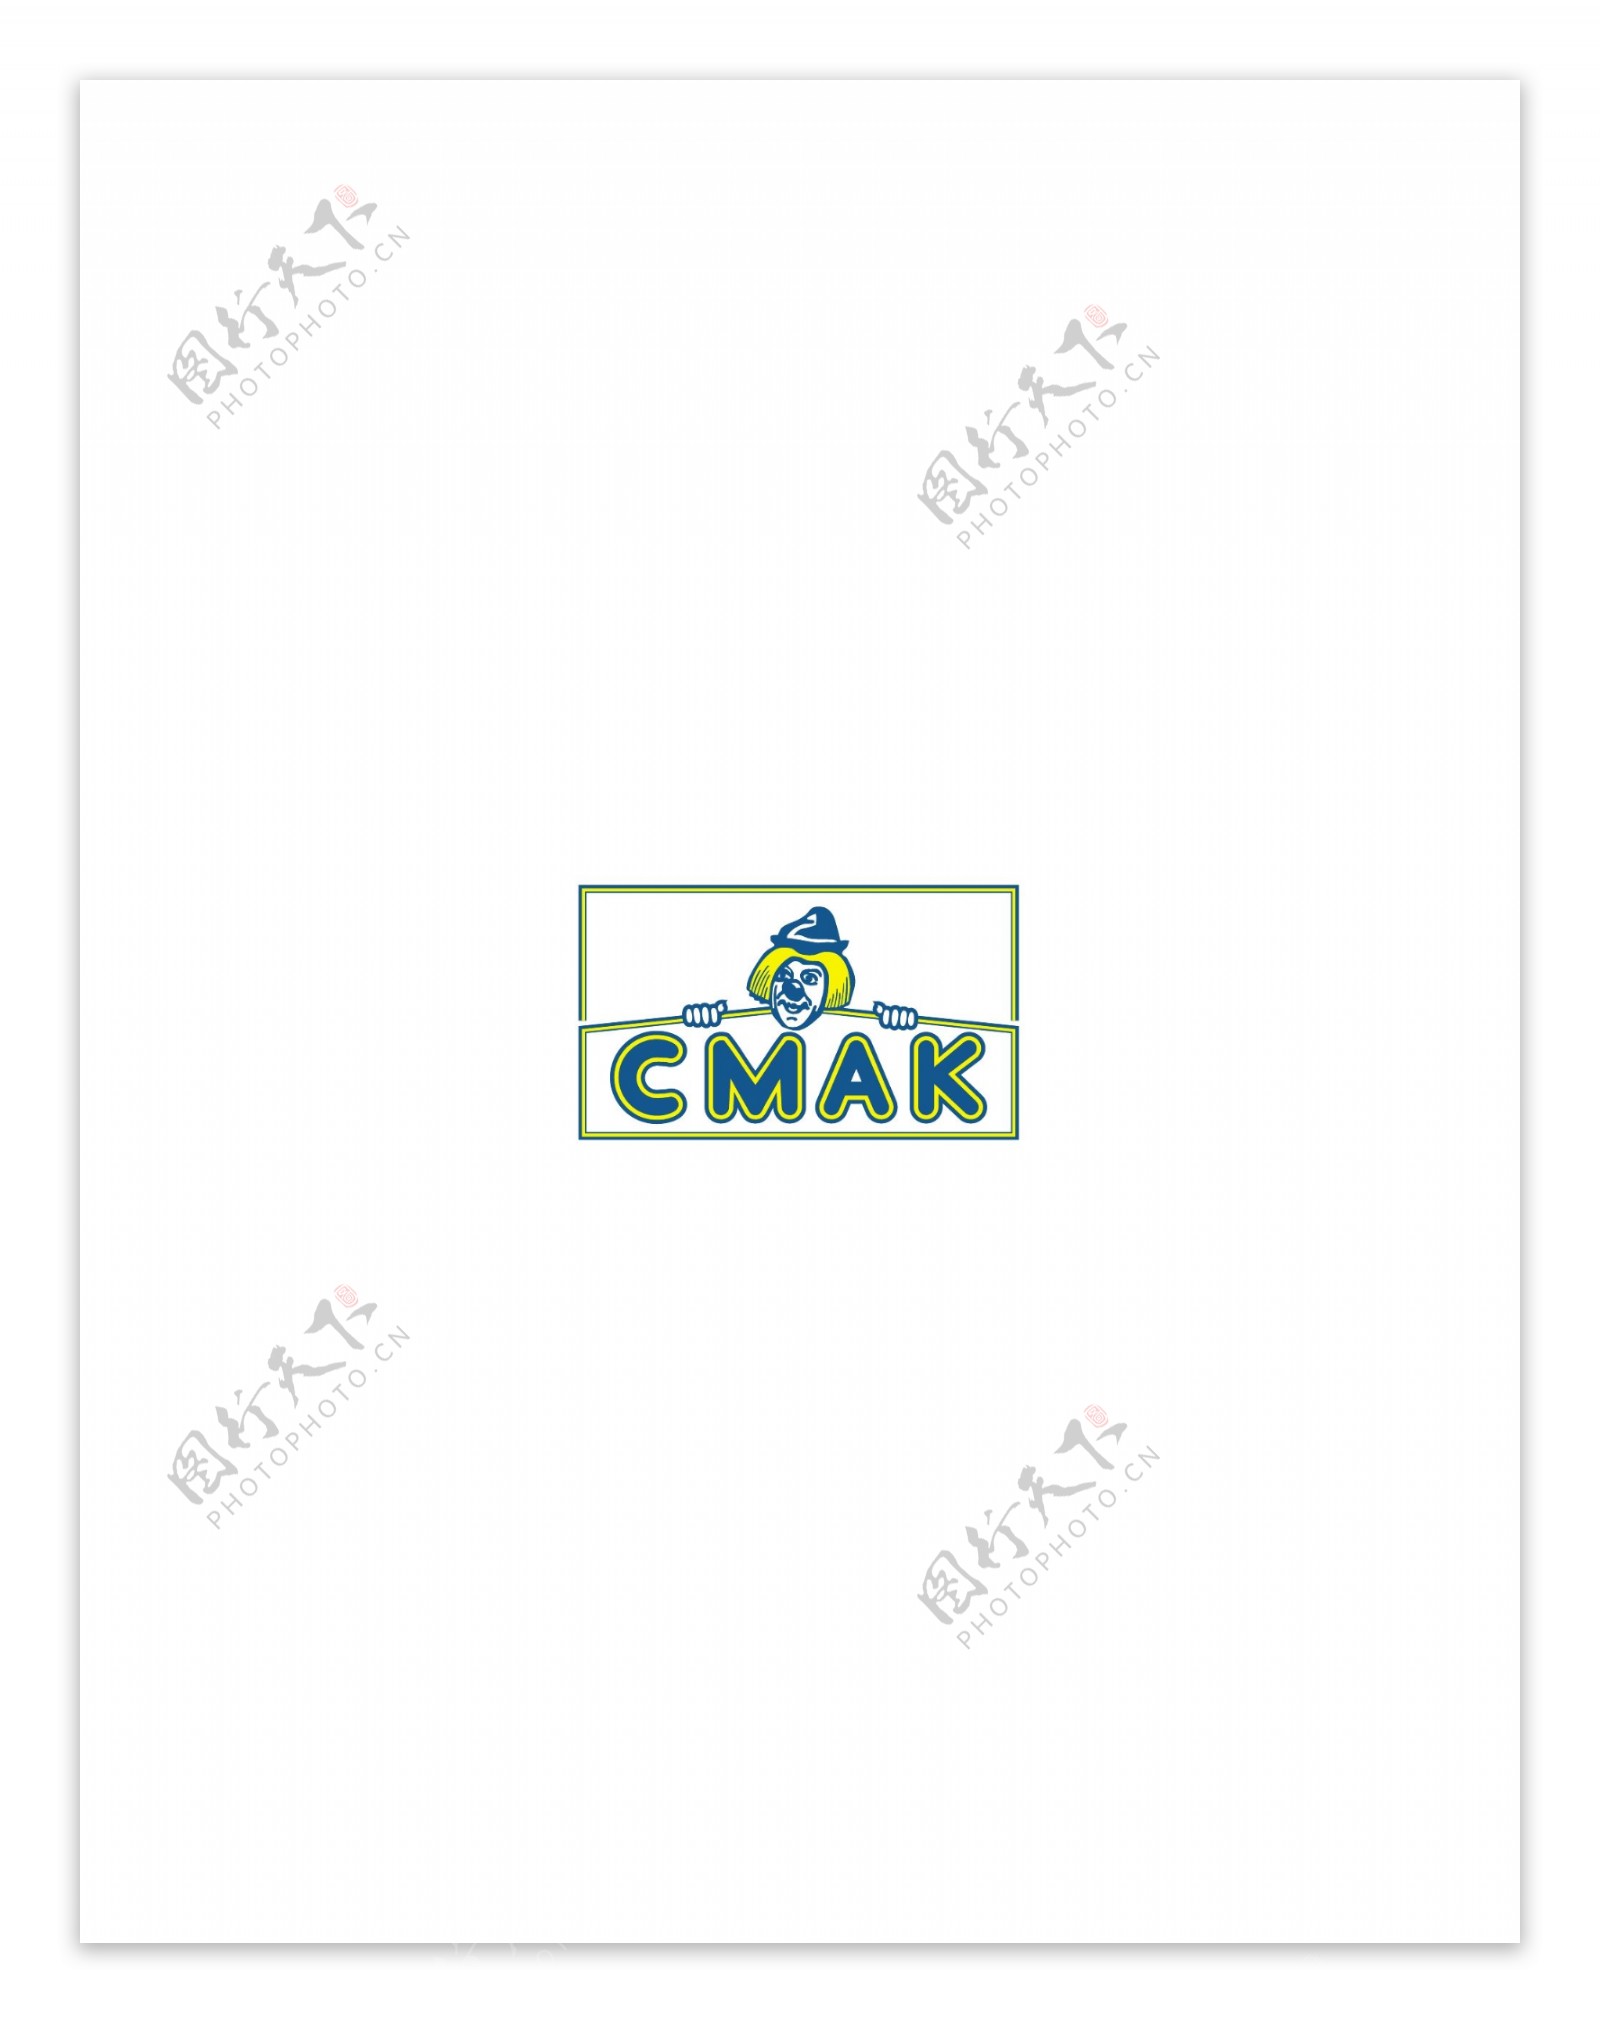 Smaklogo设计欣赏足球队队徽LOGO设计Smak下载标志设计欣赏